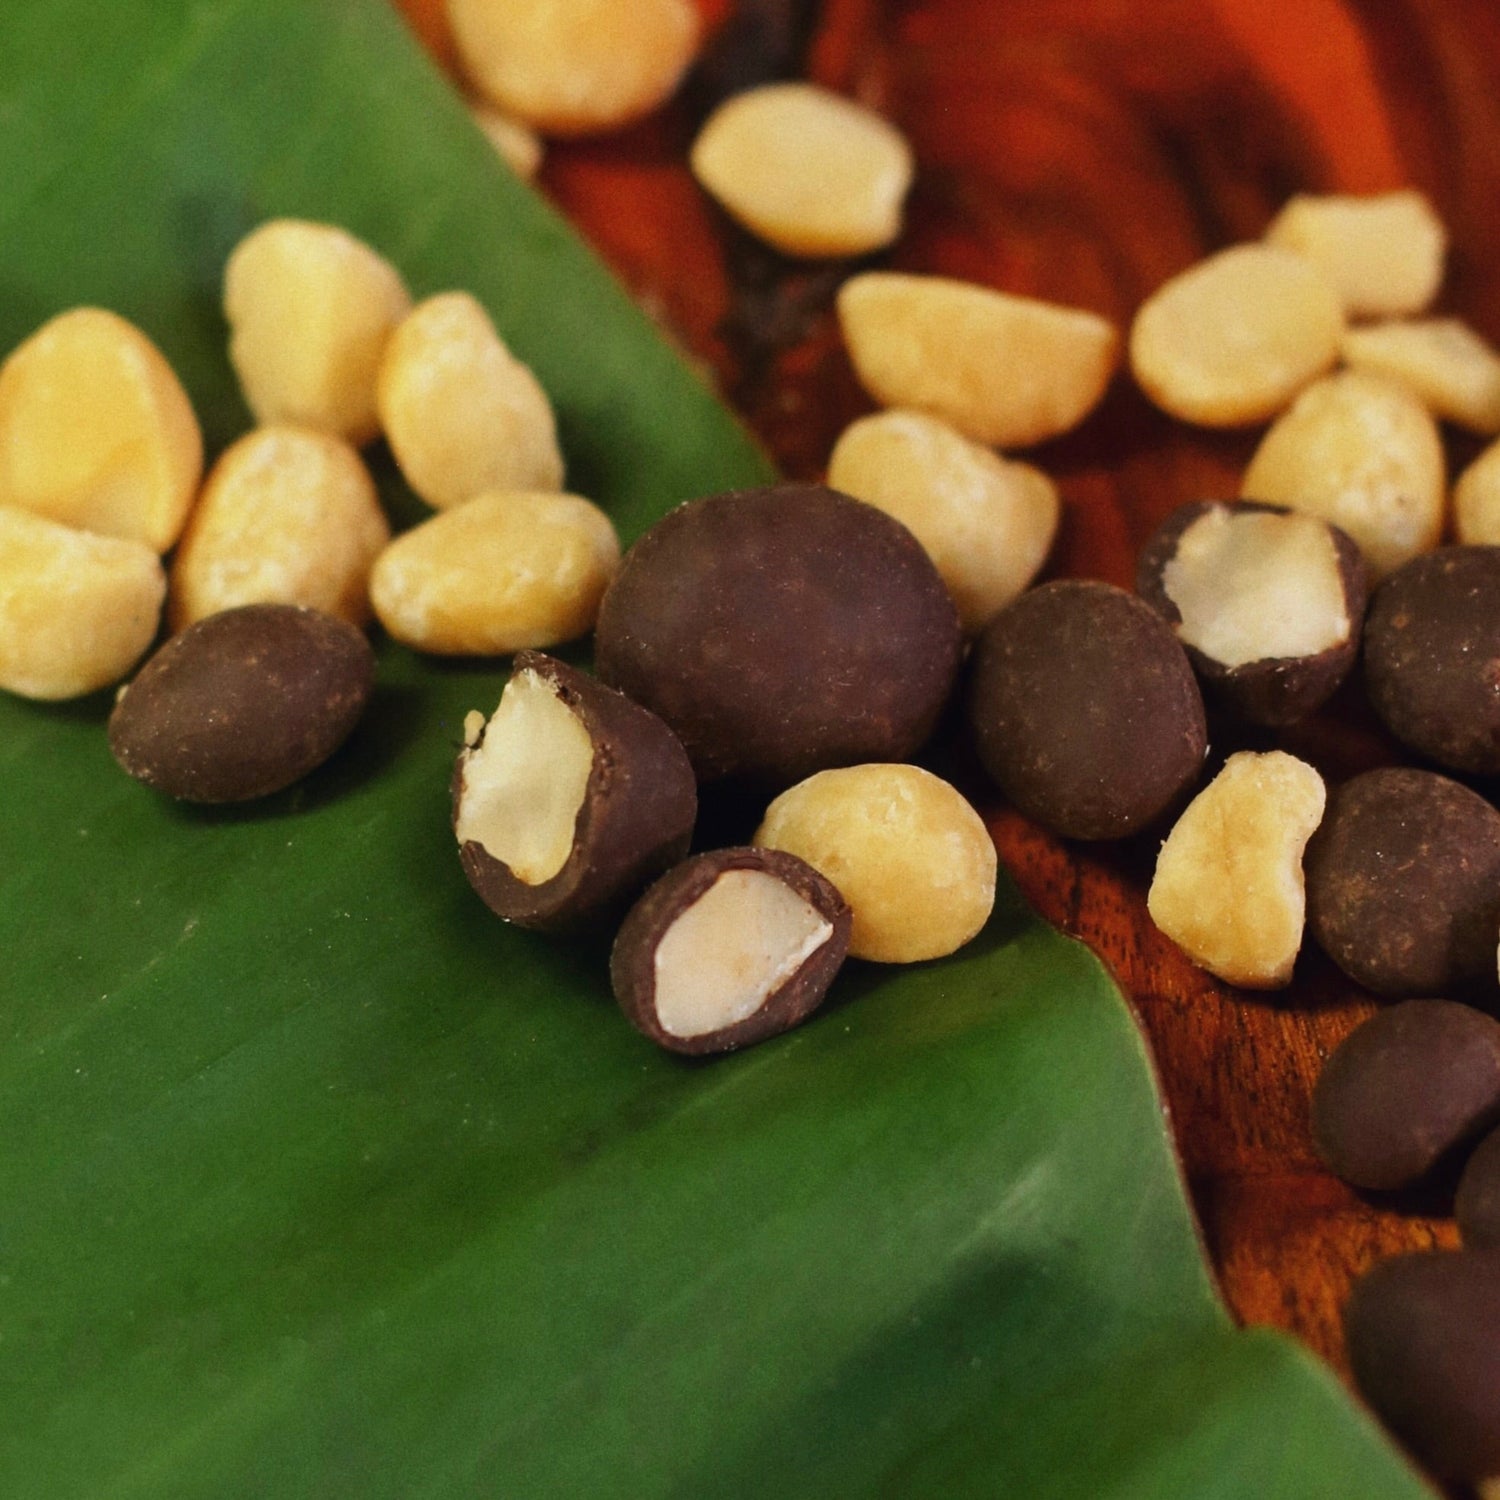 Image of lilikoi macadamias scattered on table